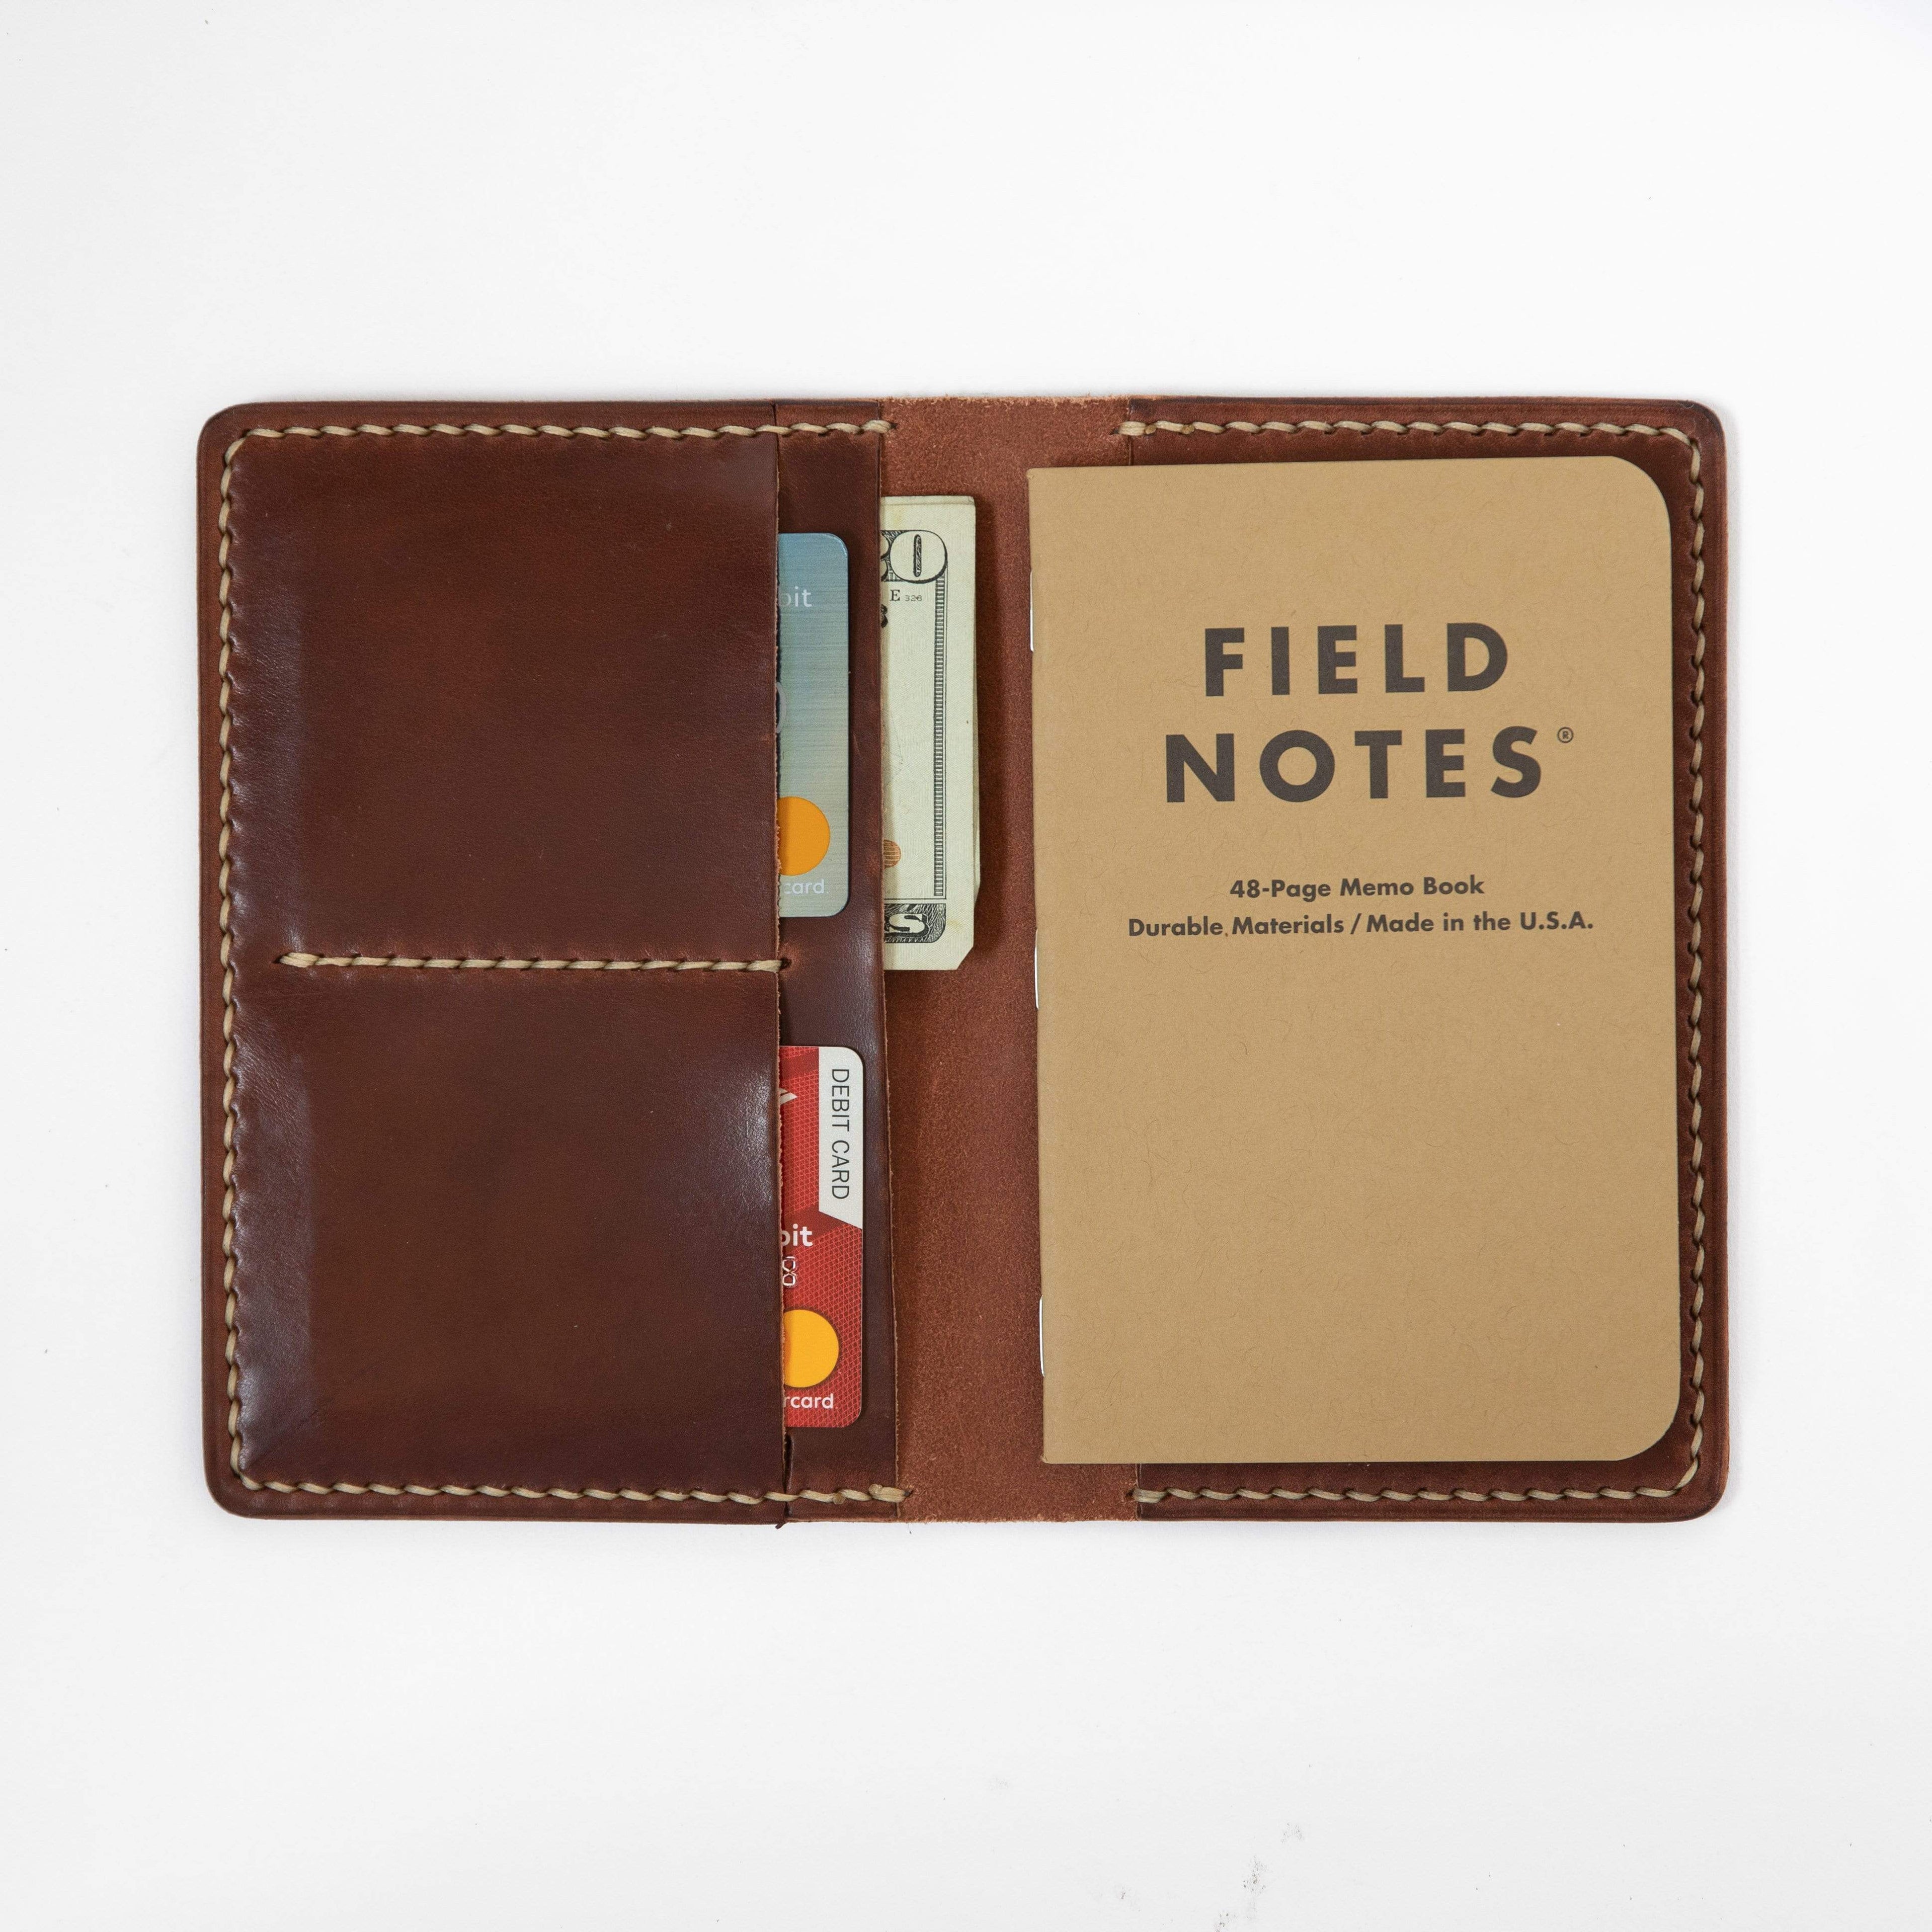 Medium Brown Notebook Wallet- leather notebook cover - passport holder - KMM &amp; Co.